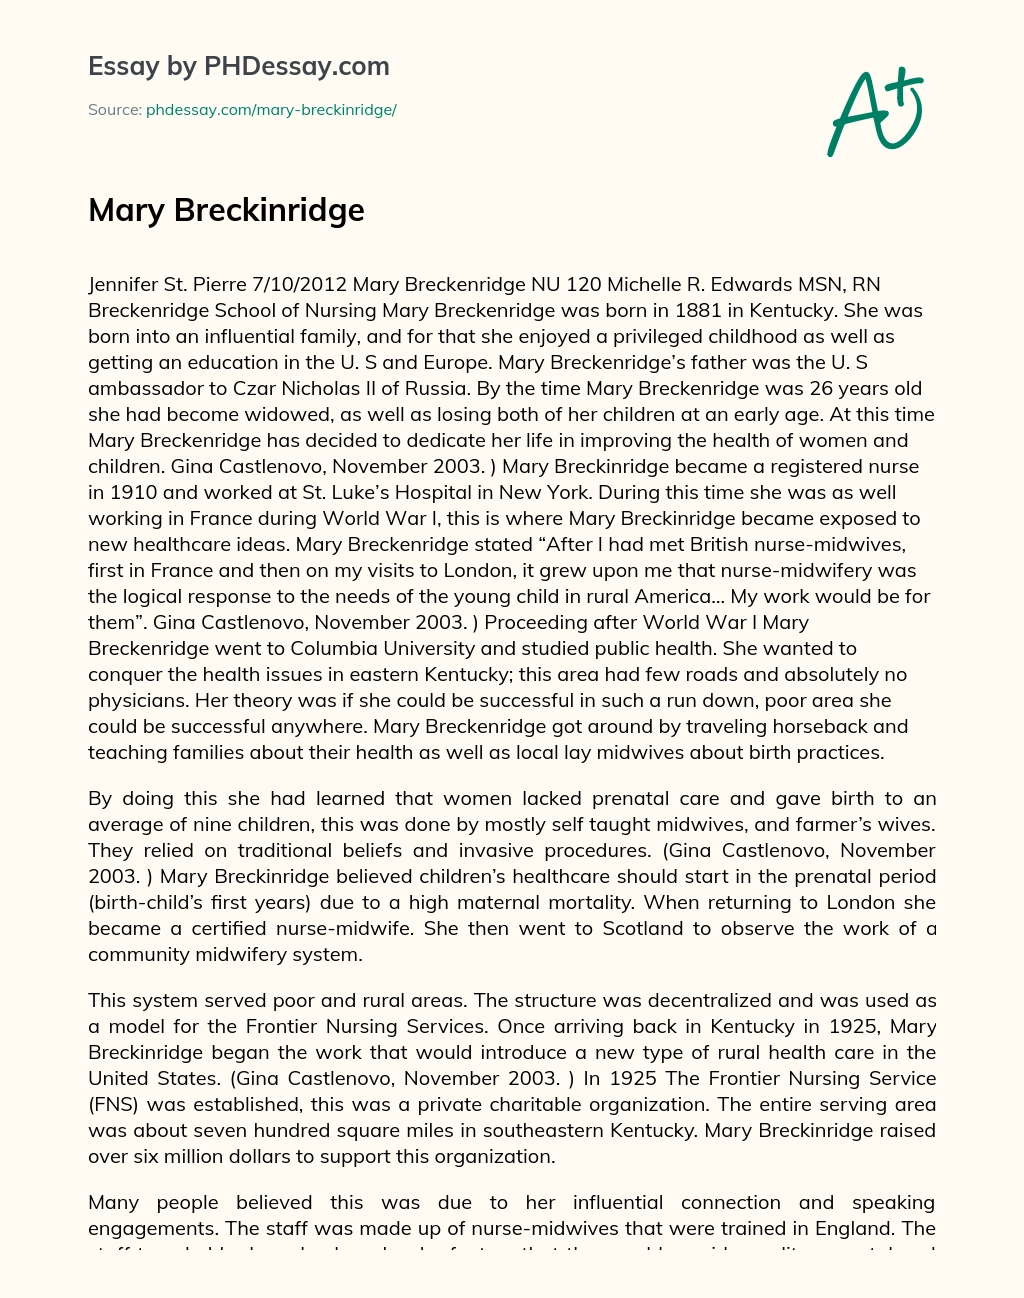 Mary Breckinridge essay